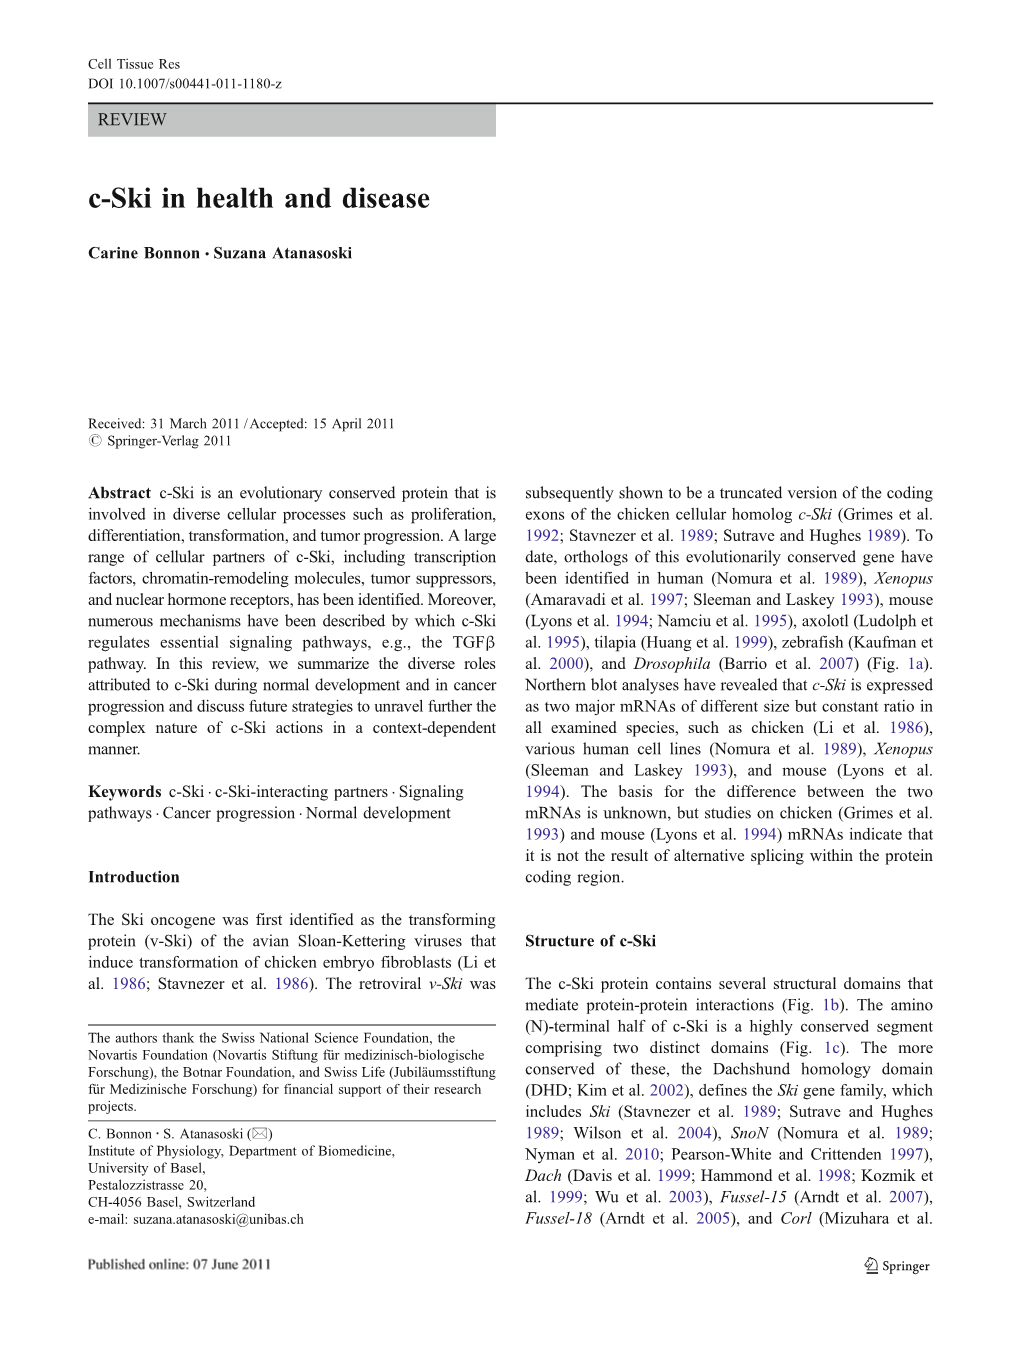 C-Ski in Health and Disease